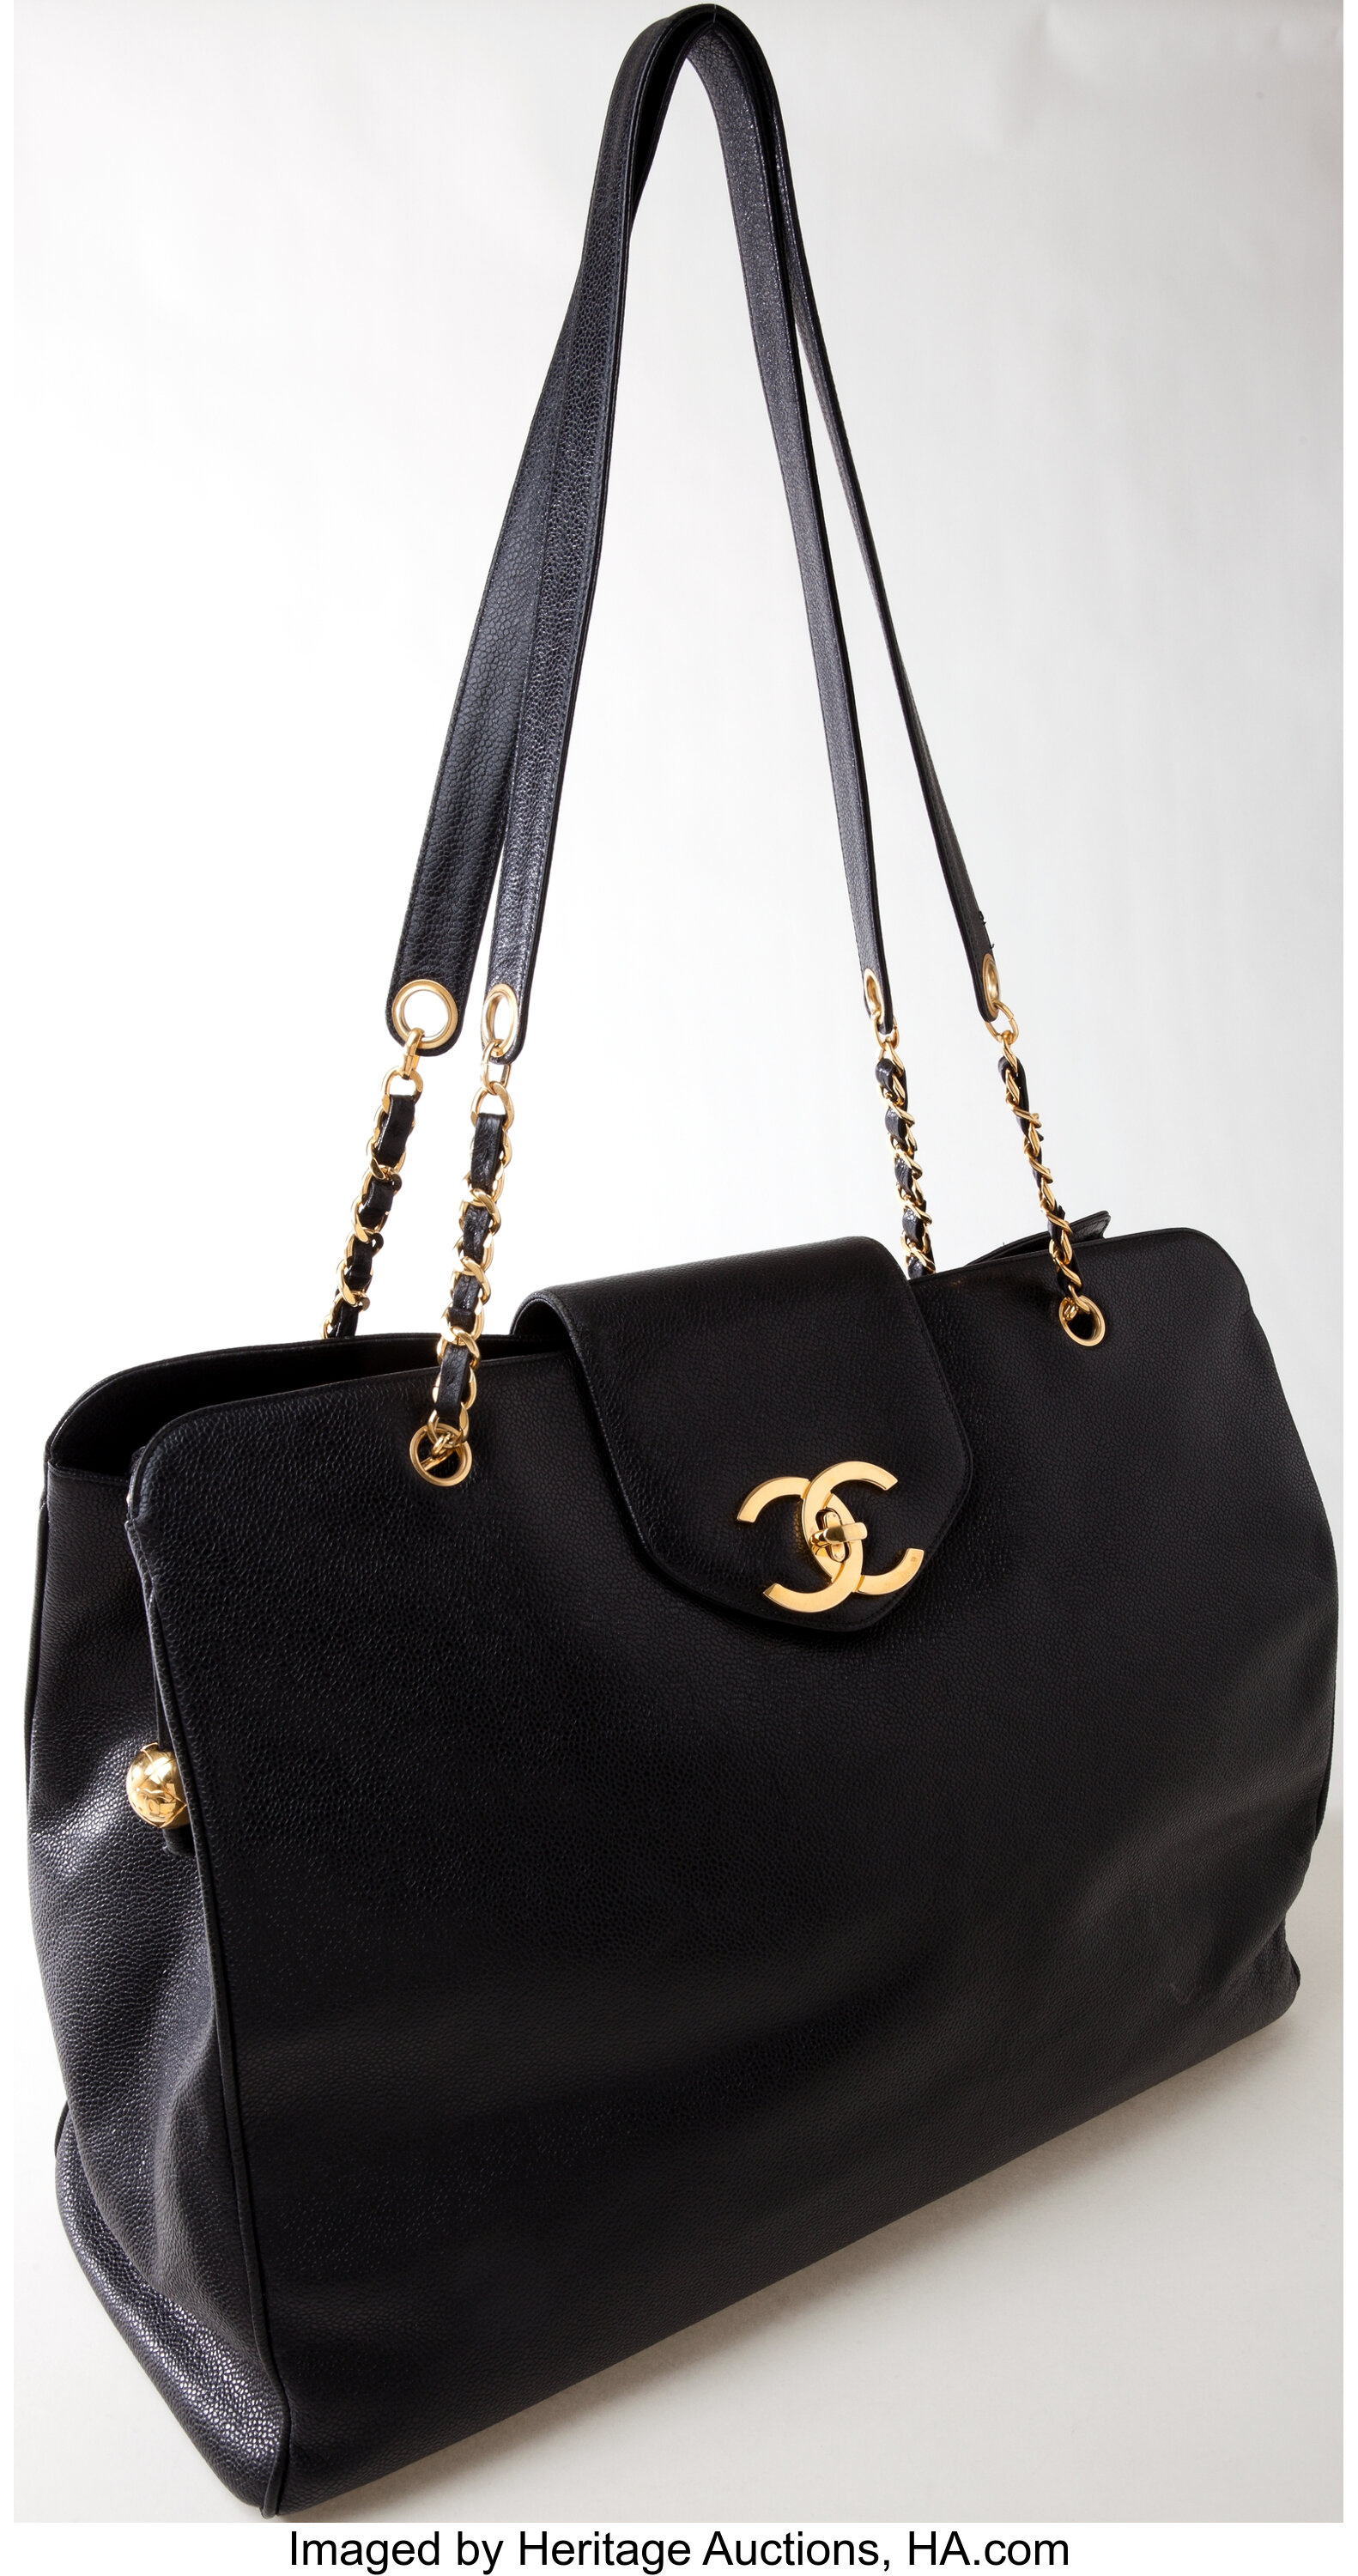 Sold at Auction: A Vintage Chanel Hobo Bag